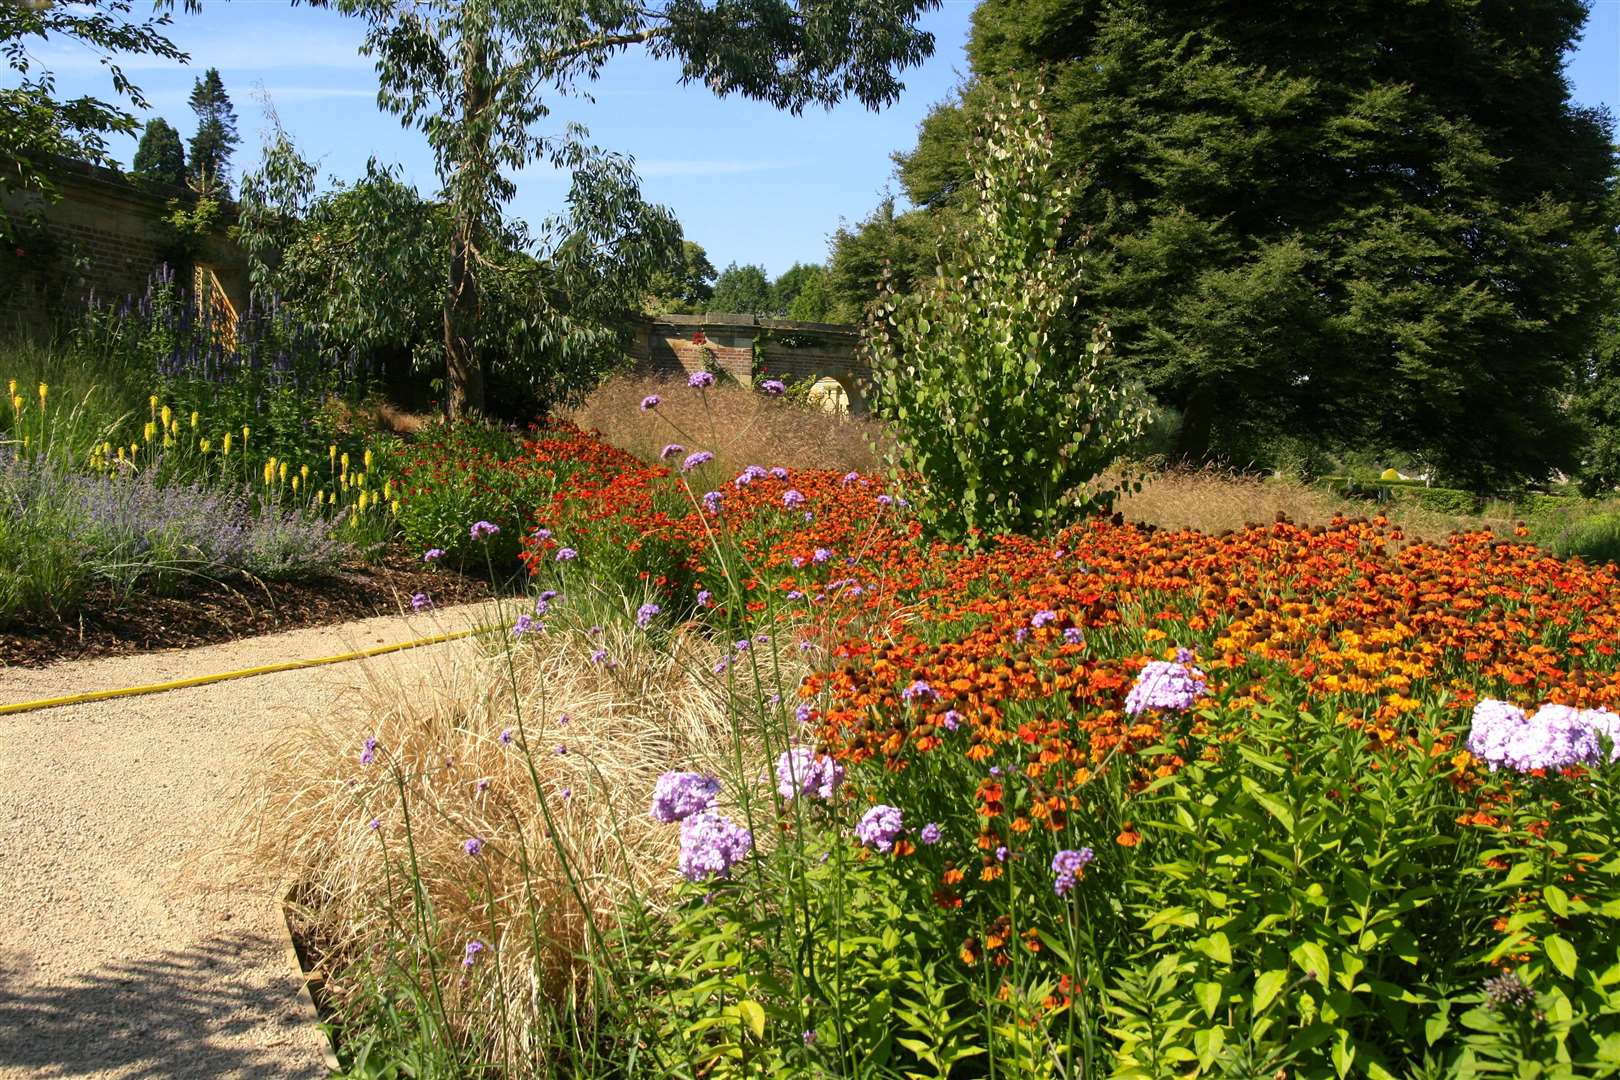 The newly planted Faith’s Garden’ on Diana’s Walk at Hever Castle